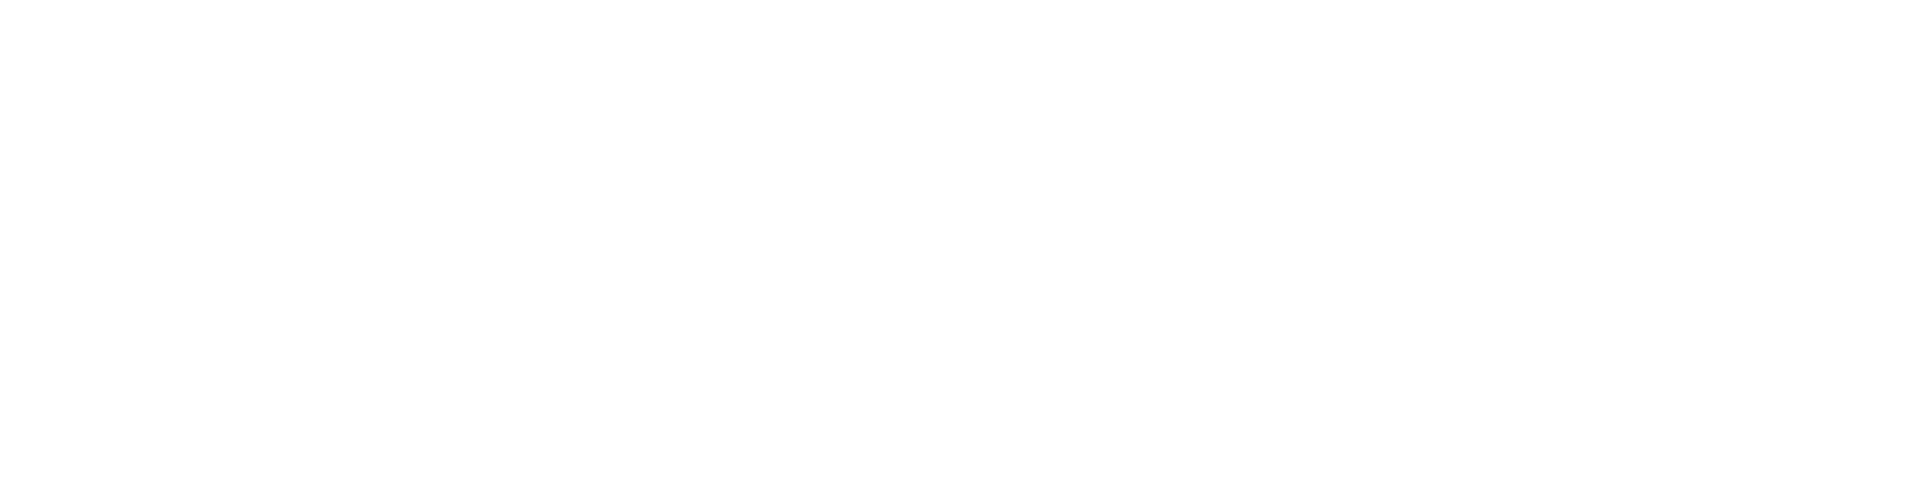 Tumbleweeds Health Center - Logo